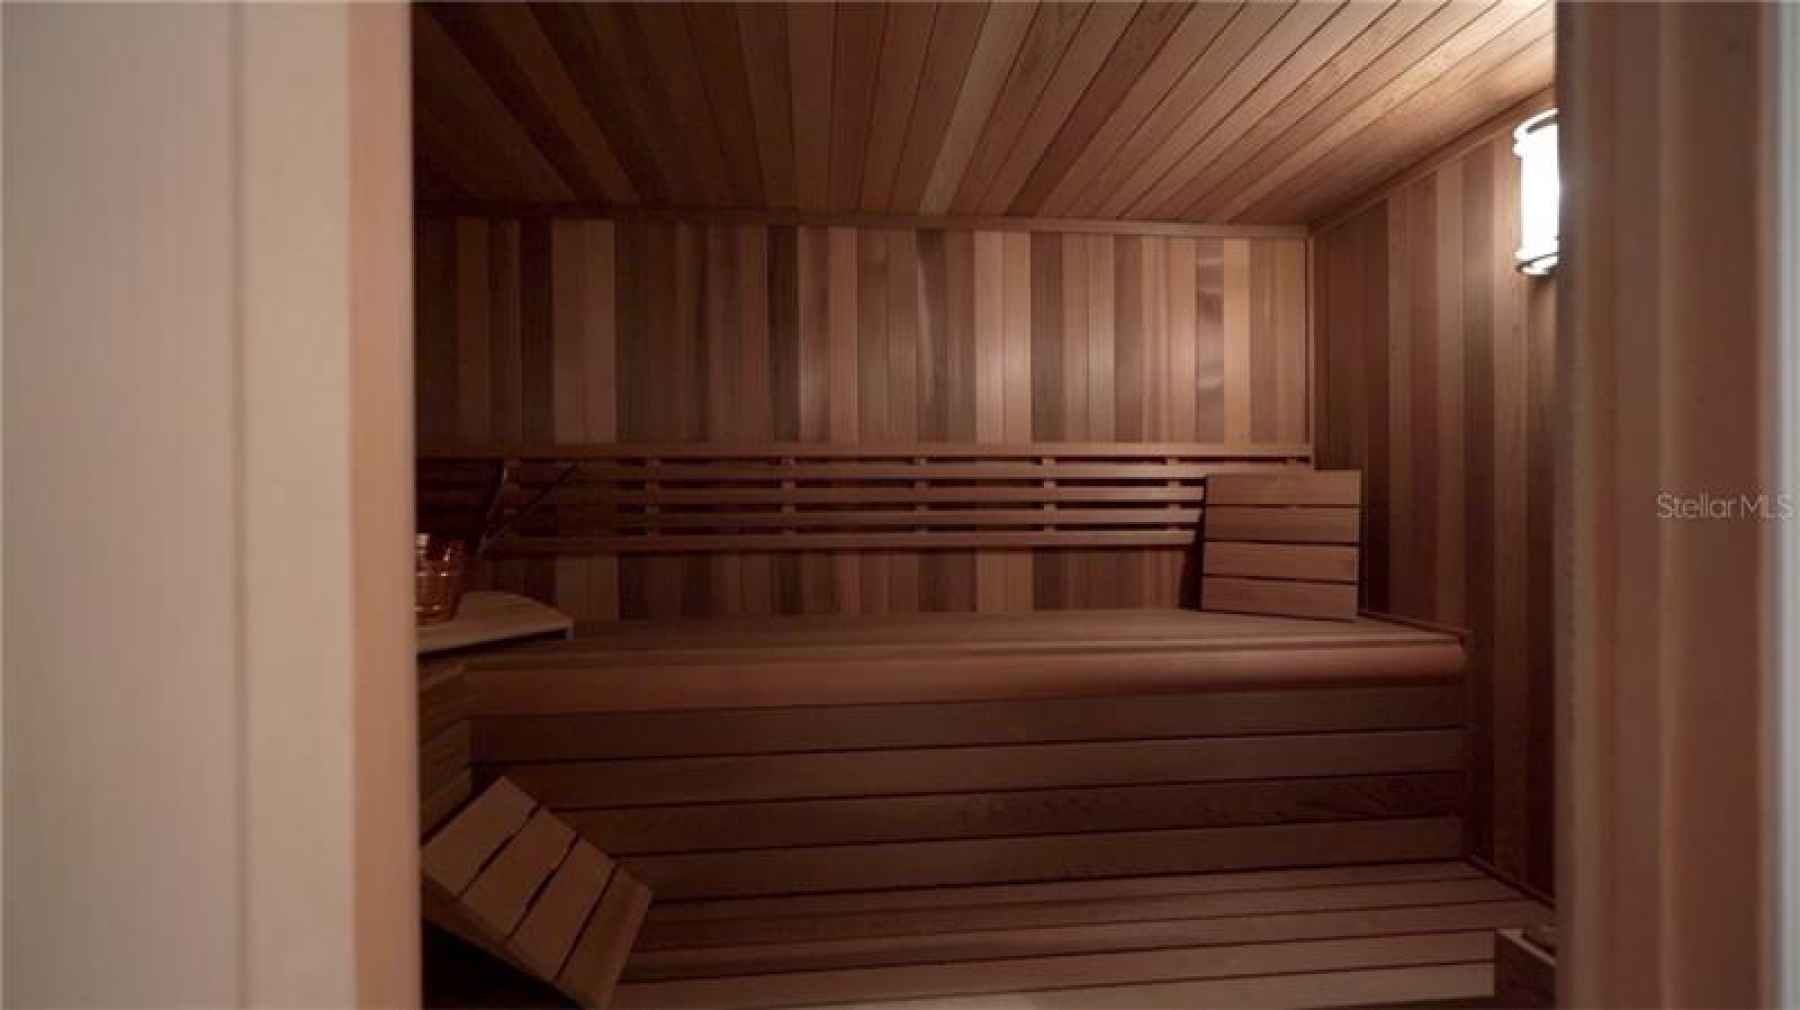 Sauna in Fitness Full Bathroom